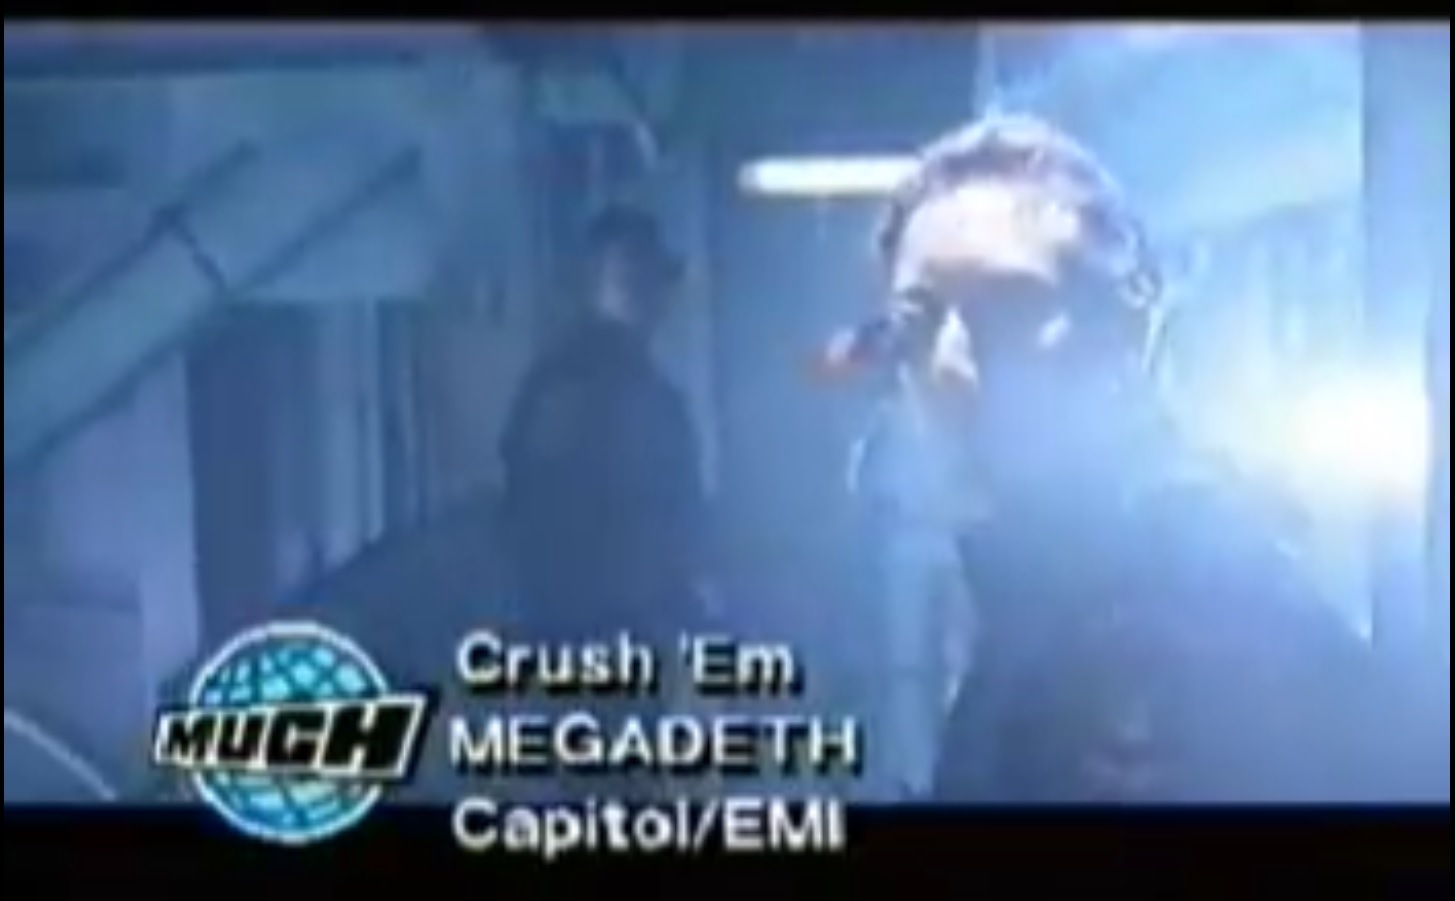 Megadeth - Crush Em (Music Video)